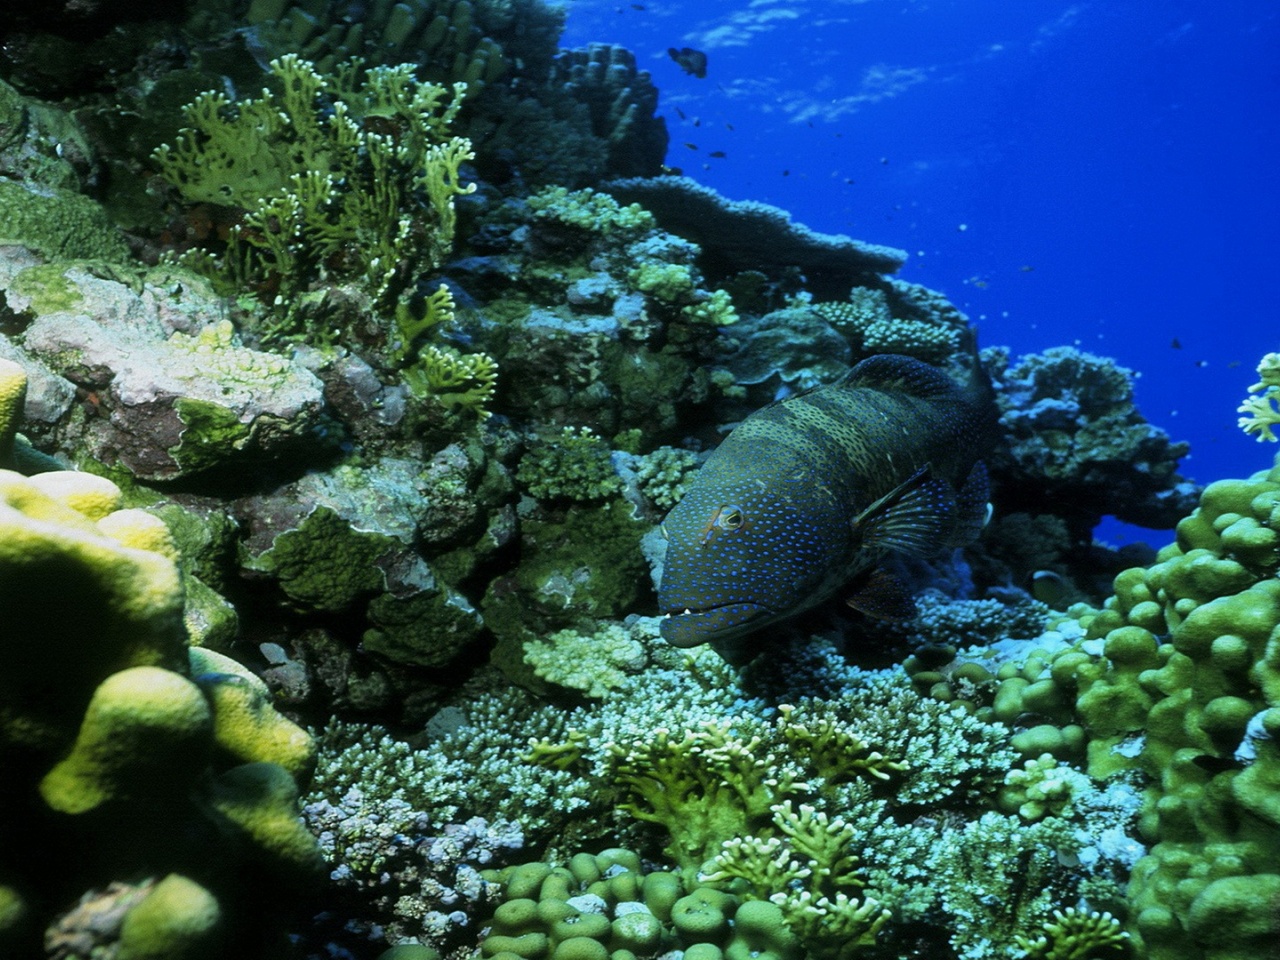 Ocean Fish Seabed Nature